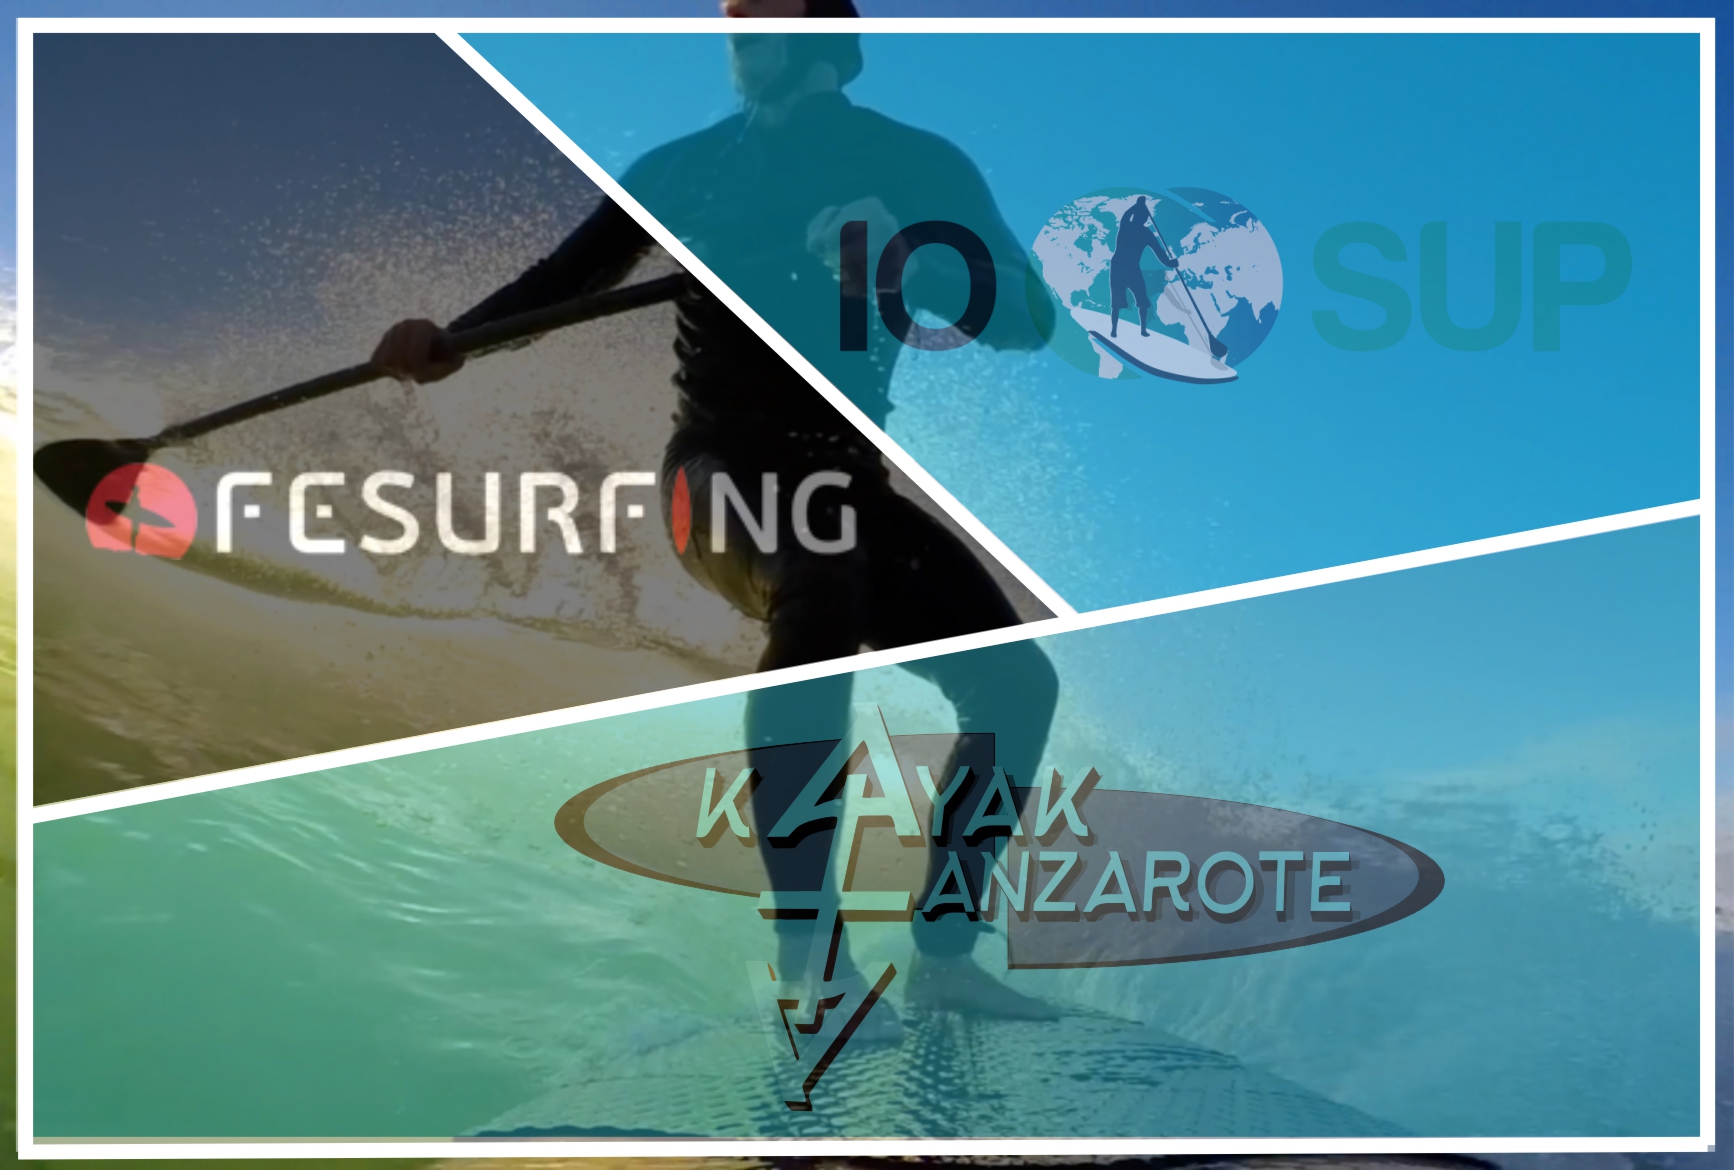 Logos d'images Kayaklanzarote, Iosup et fesurf